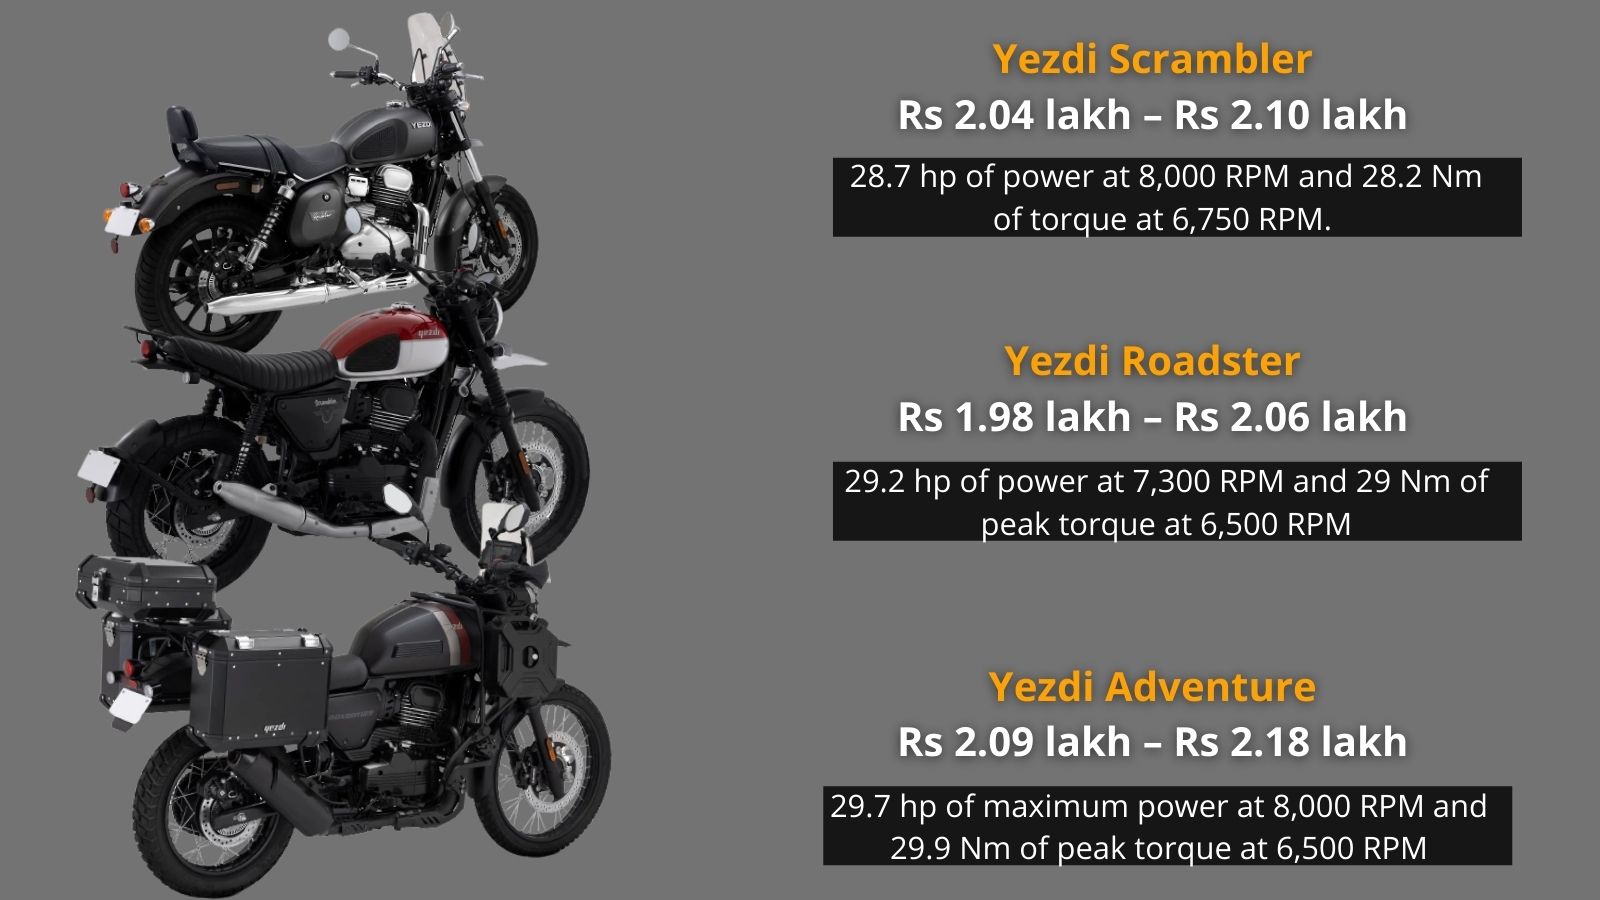 Yezdi returns to India with Adventure, Scrambler, and Roadster bikes